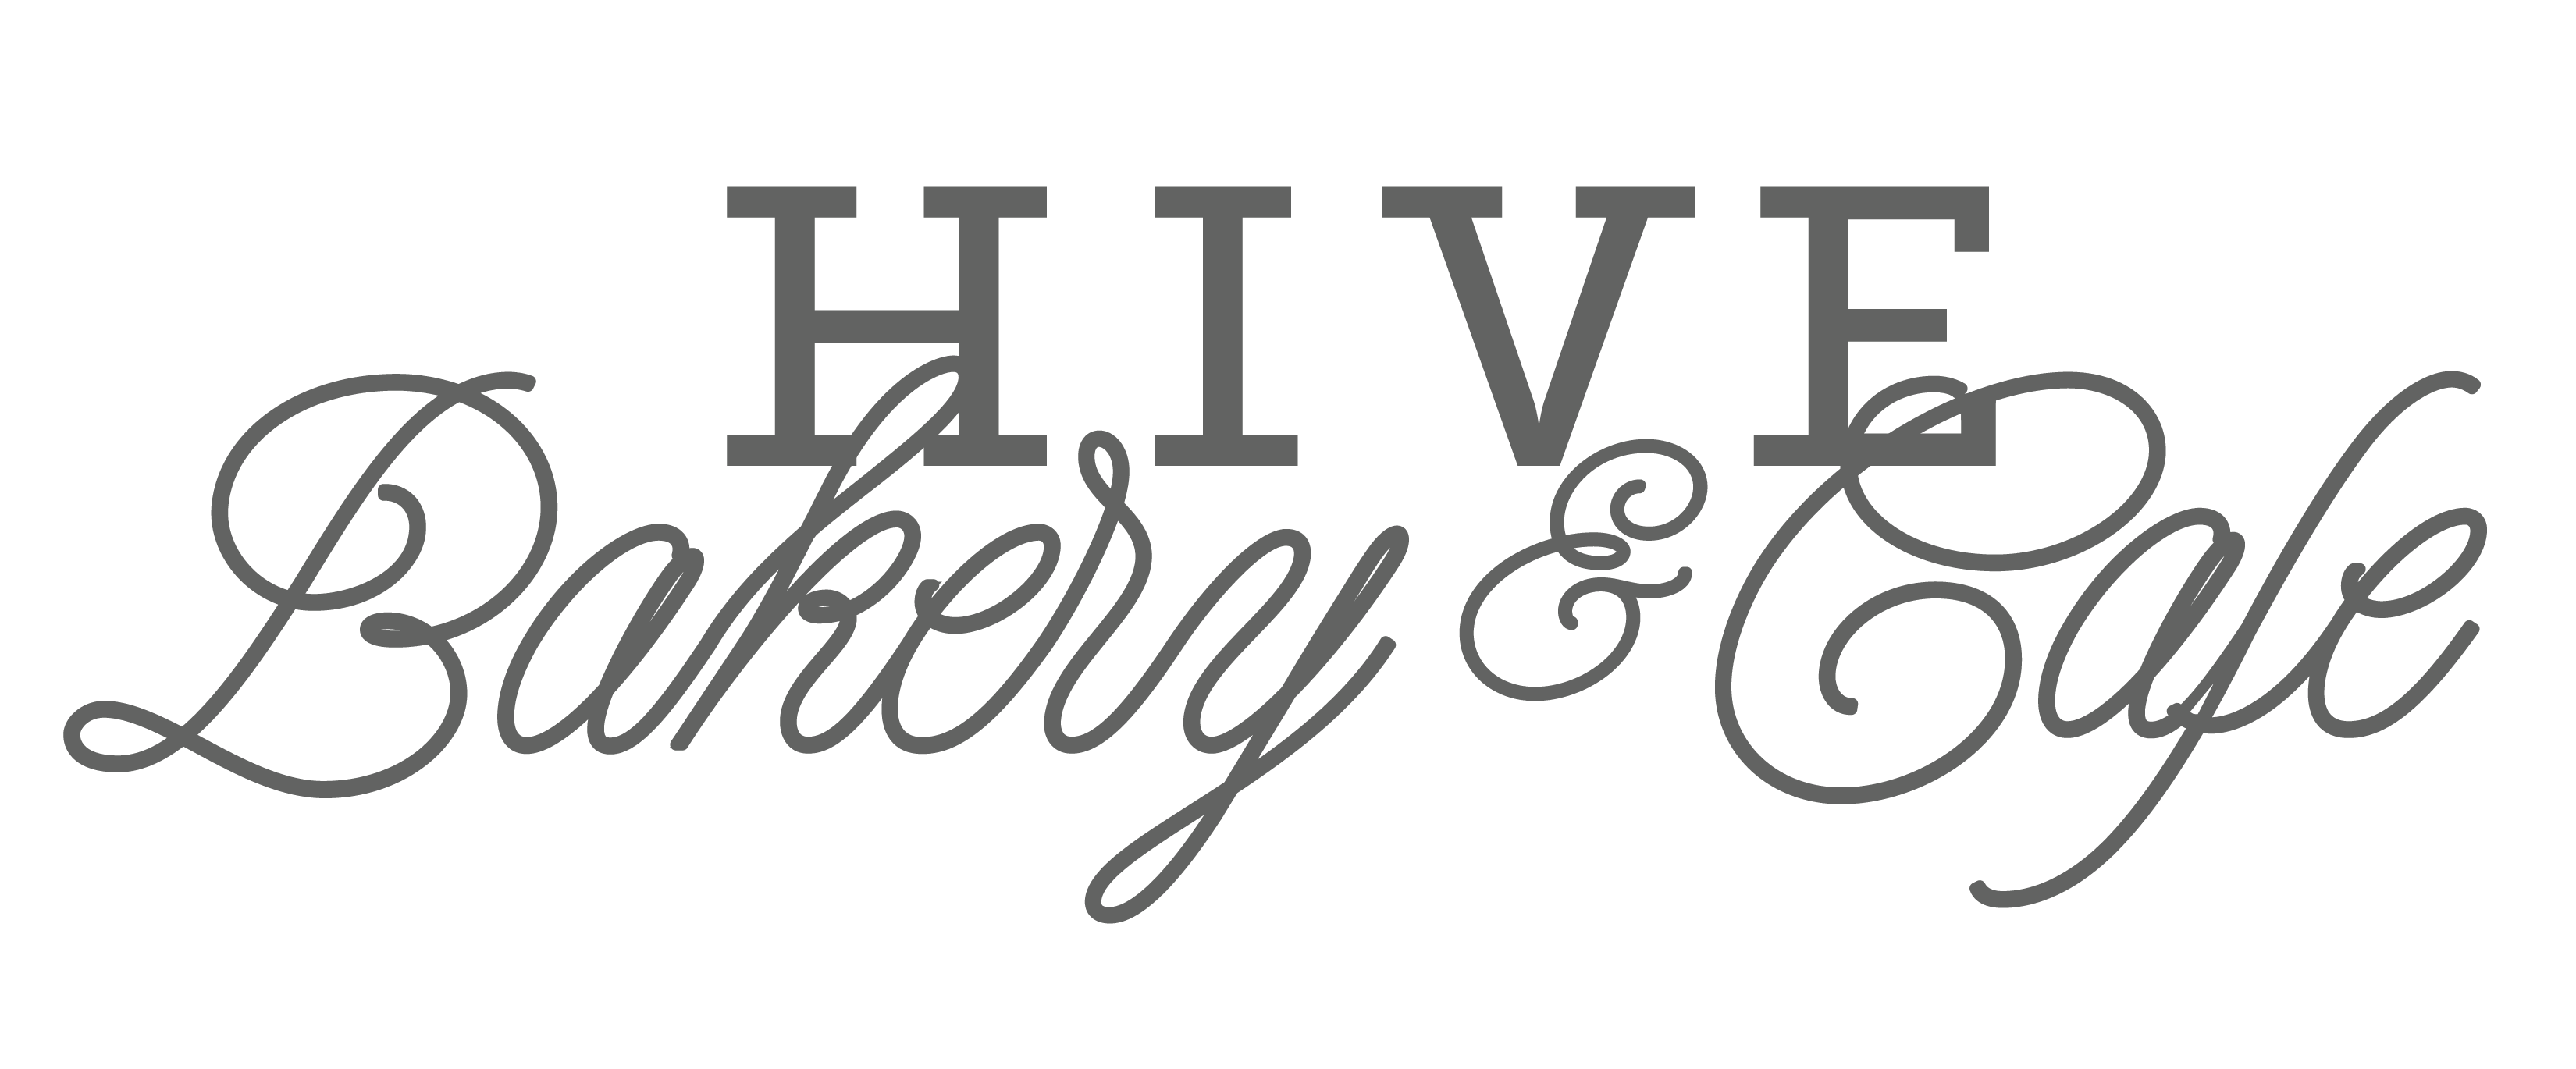 Hive Bakery & Cafe logo